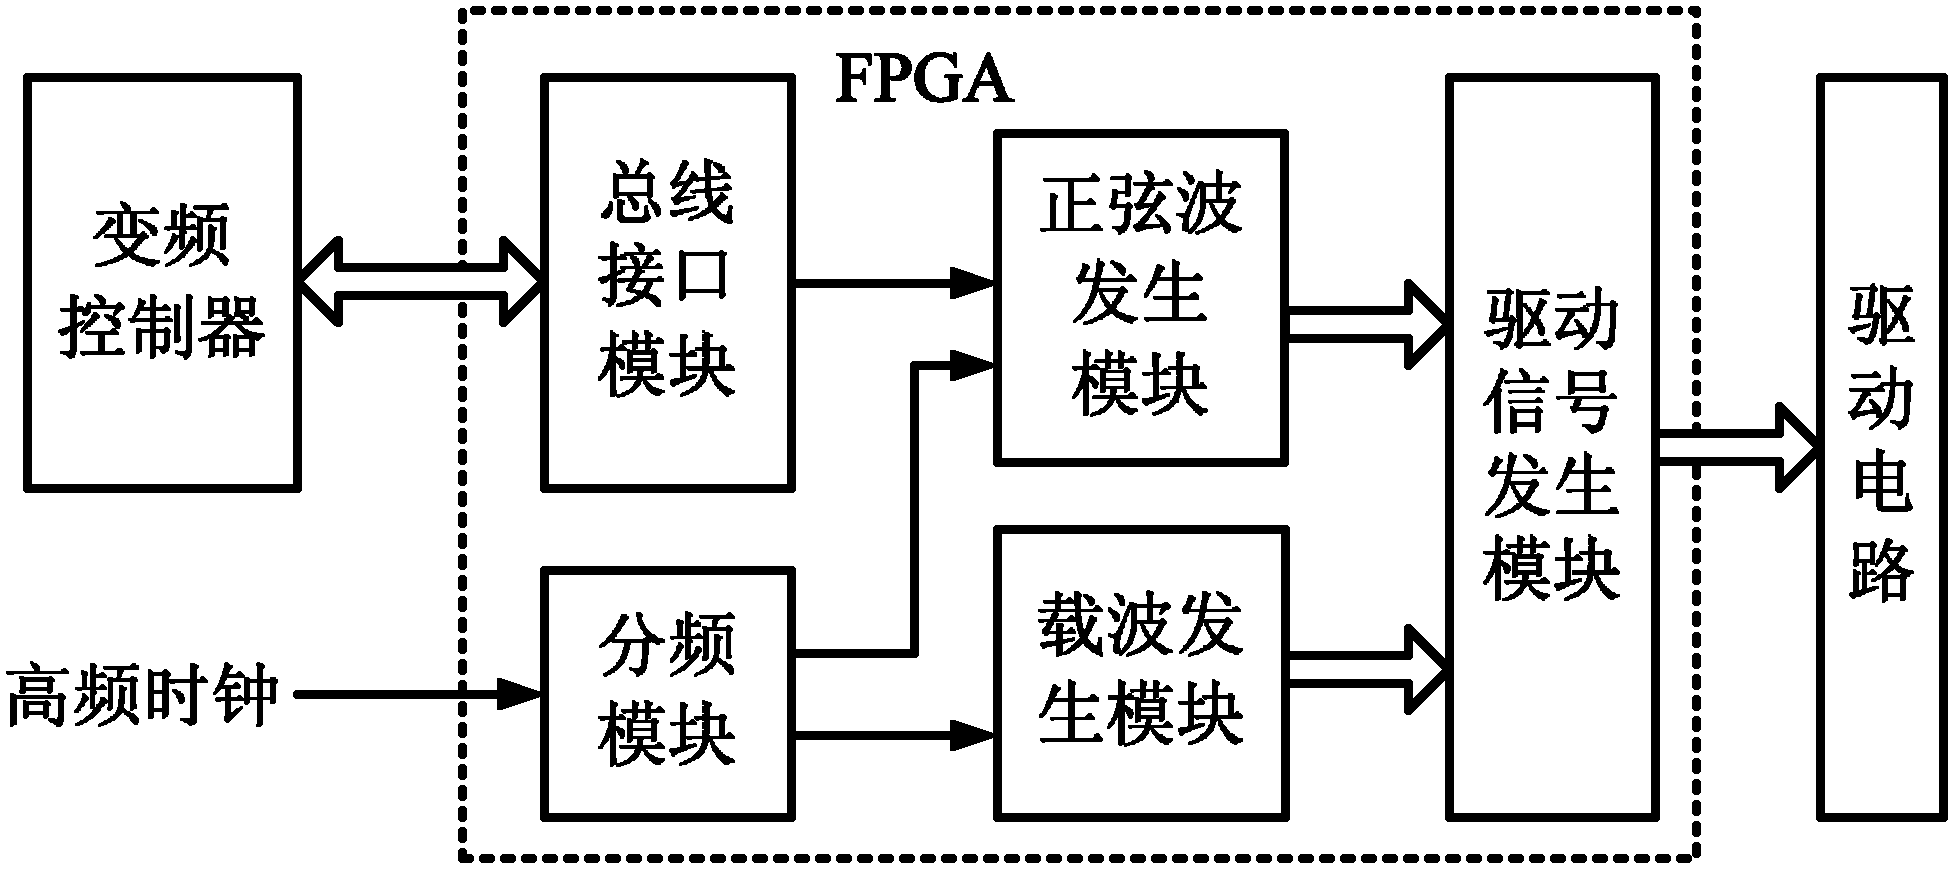 Field programmable gate array (FPGA)-driving-based cascaded multilevel converter